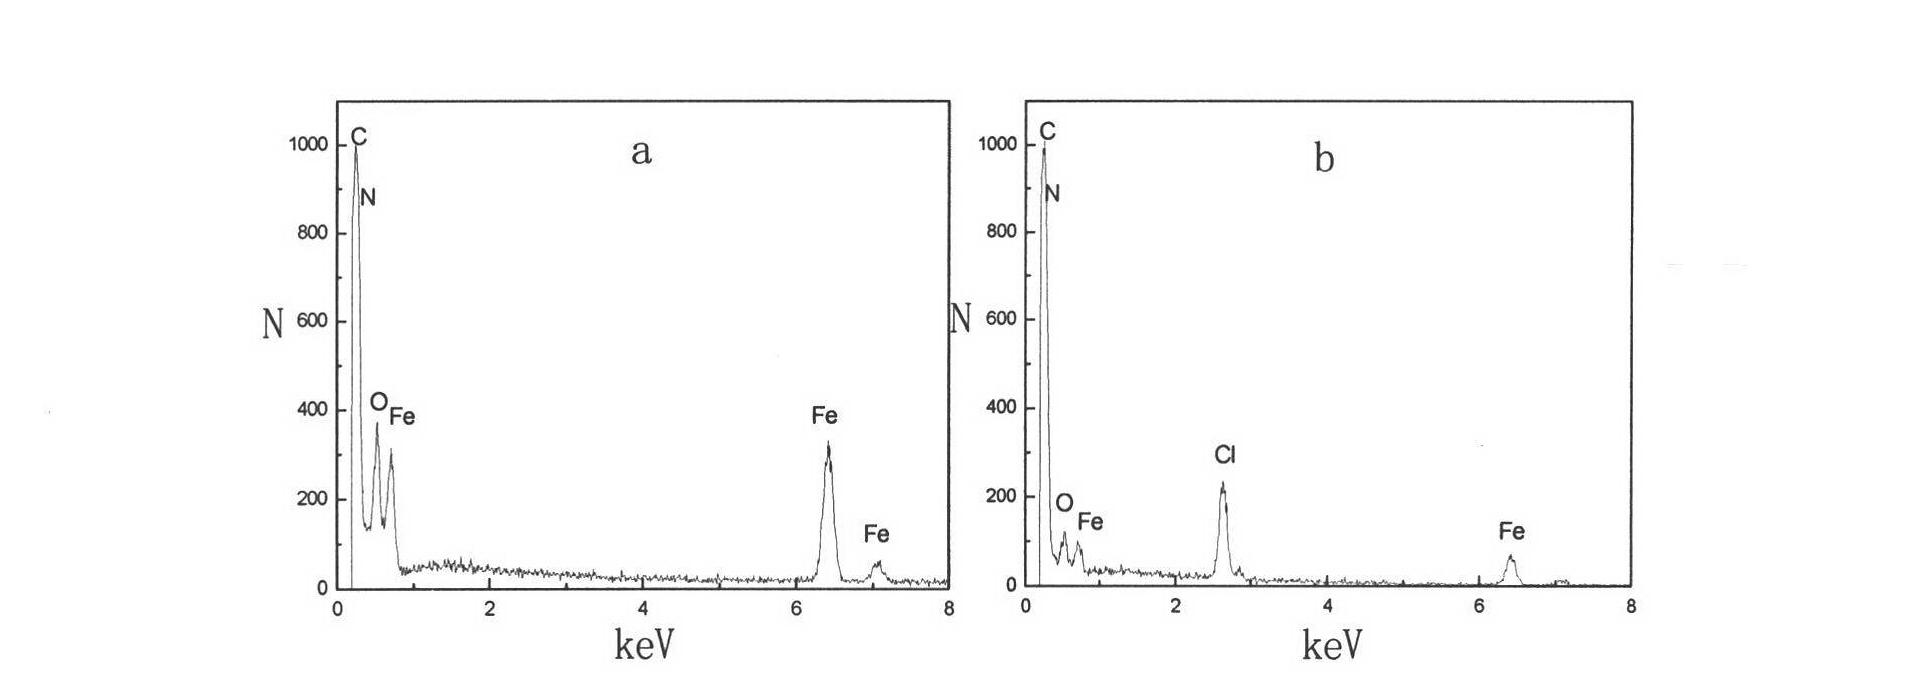 Nanometer gamma-ferric oxide/ polyaniline- chlorambucil and preparation method